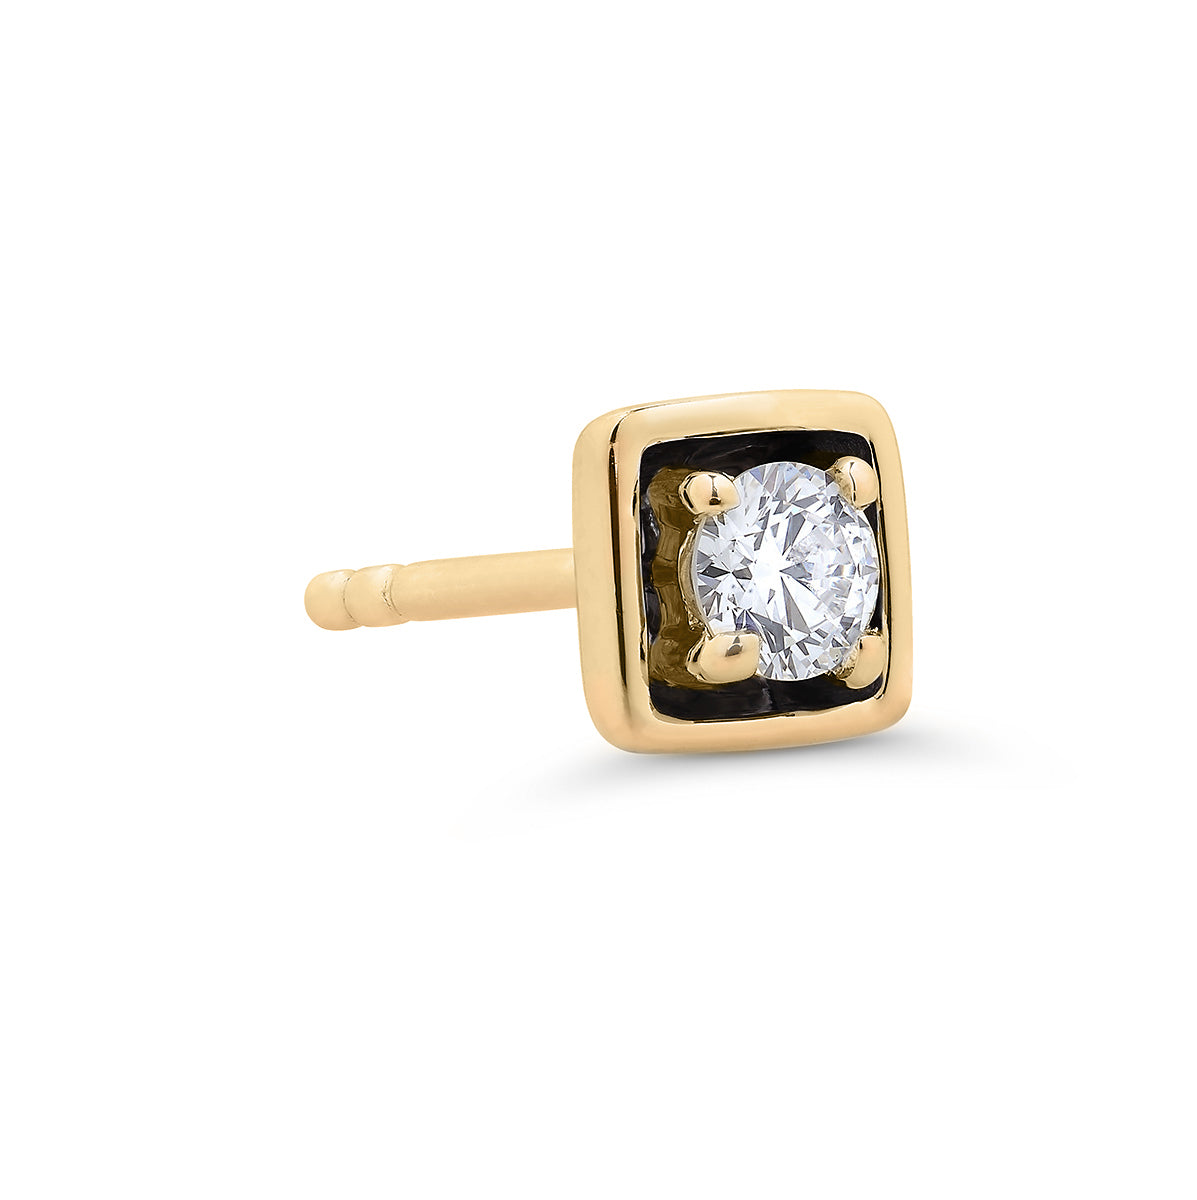 Edgy Diamond Studs in 14K Gold